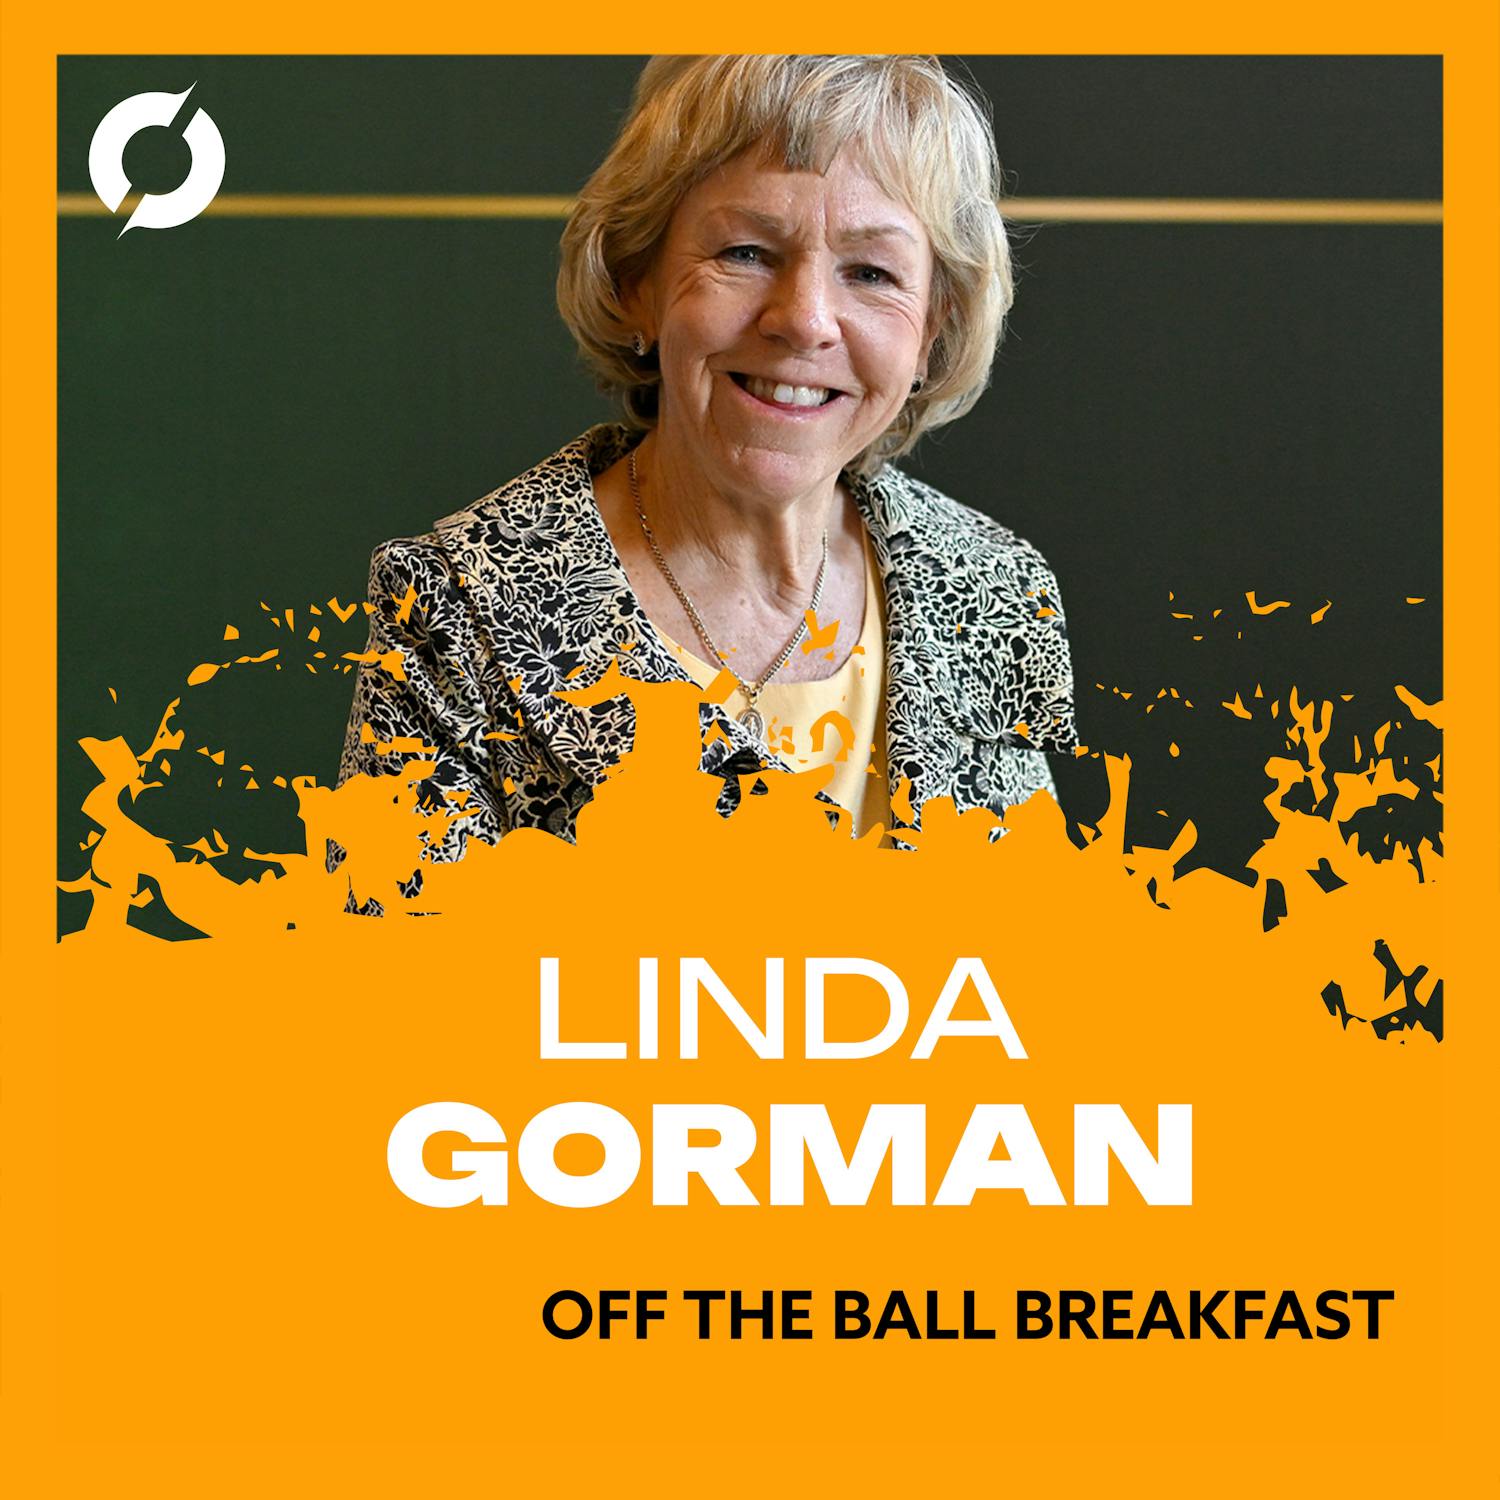 Linda Gorman: Exhibition on history of Women’s Football in Ireland